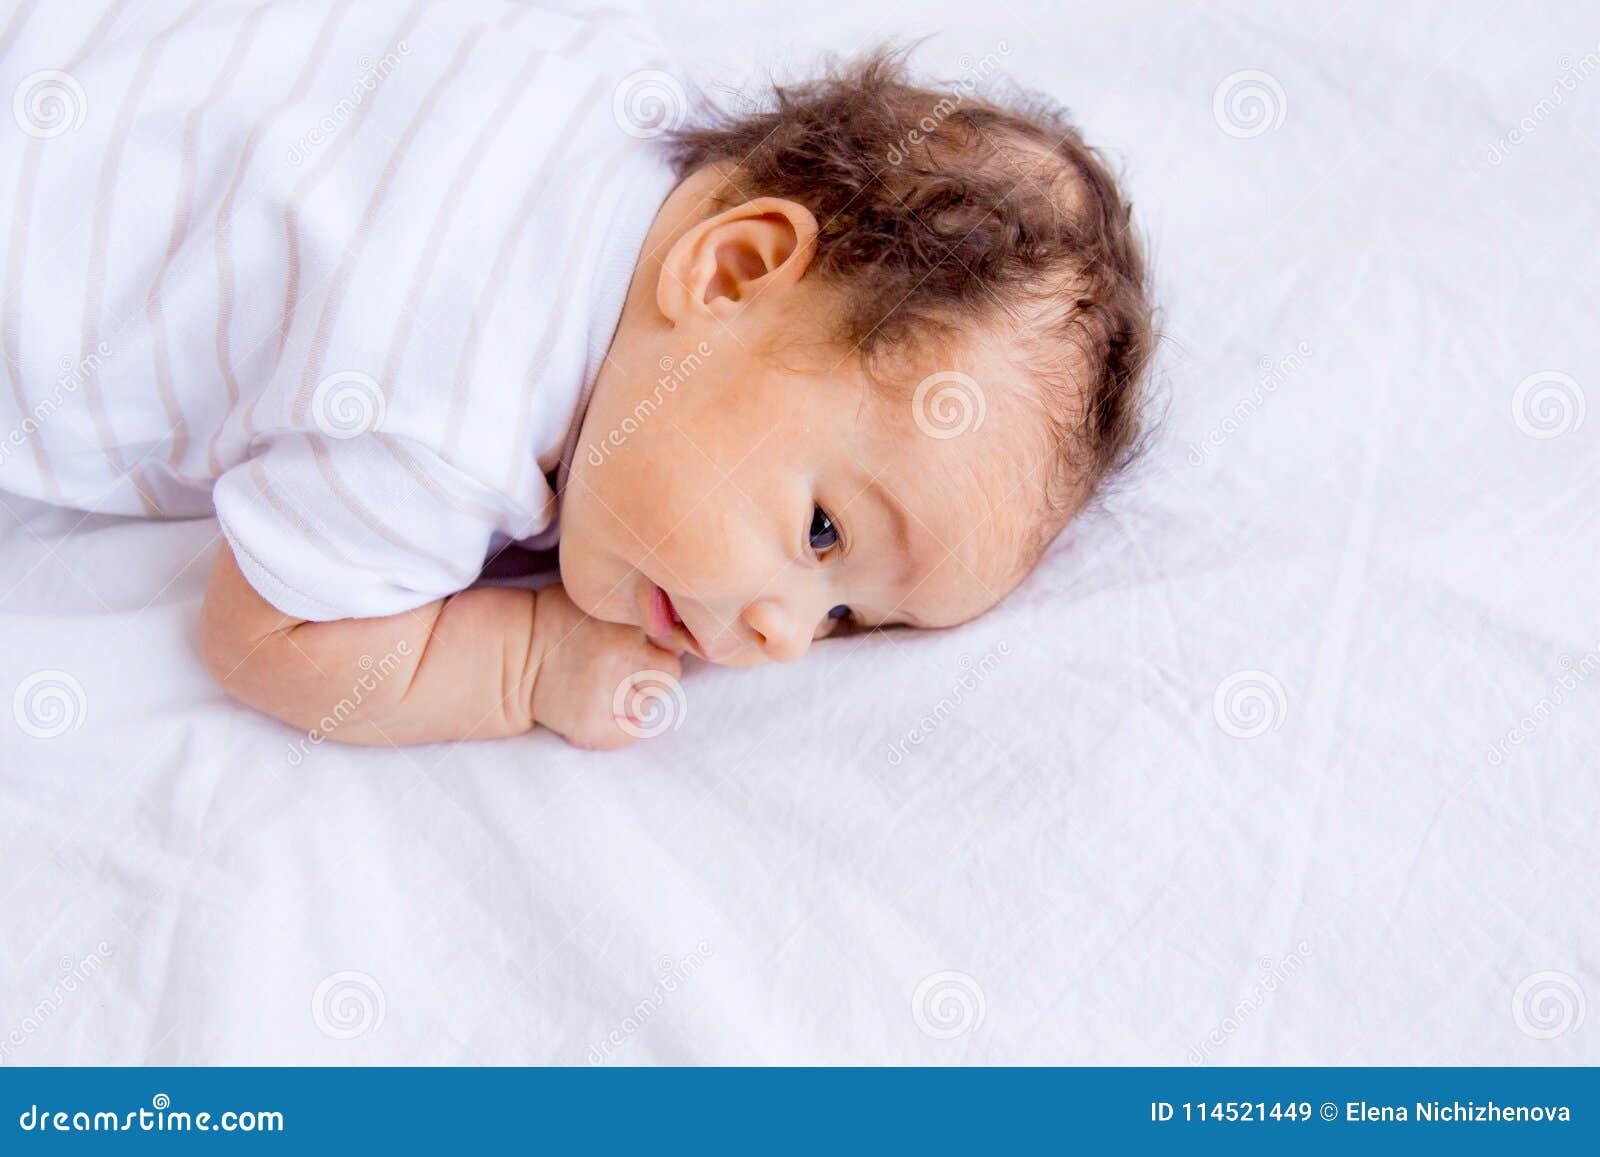 Newborn Infant Baby Stock Image Image Of Infant Childhood 114521449